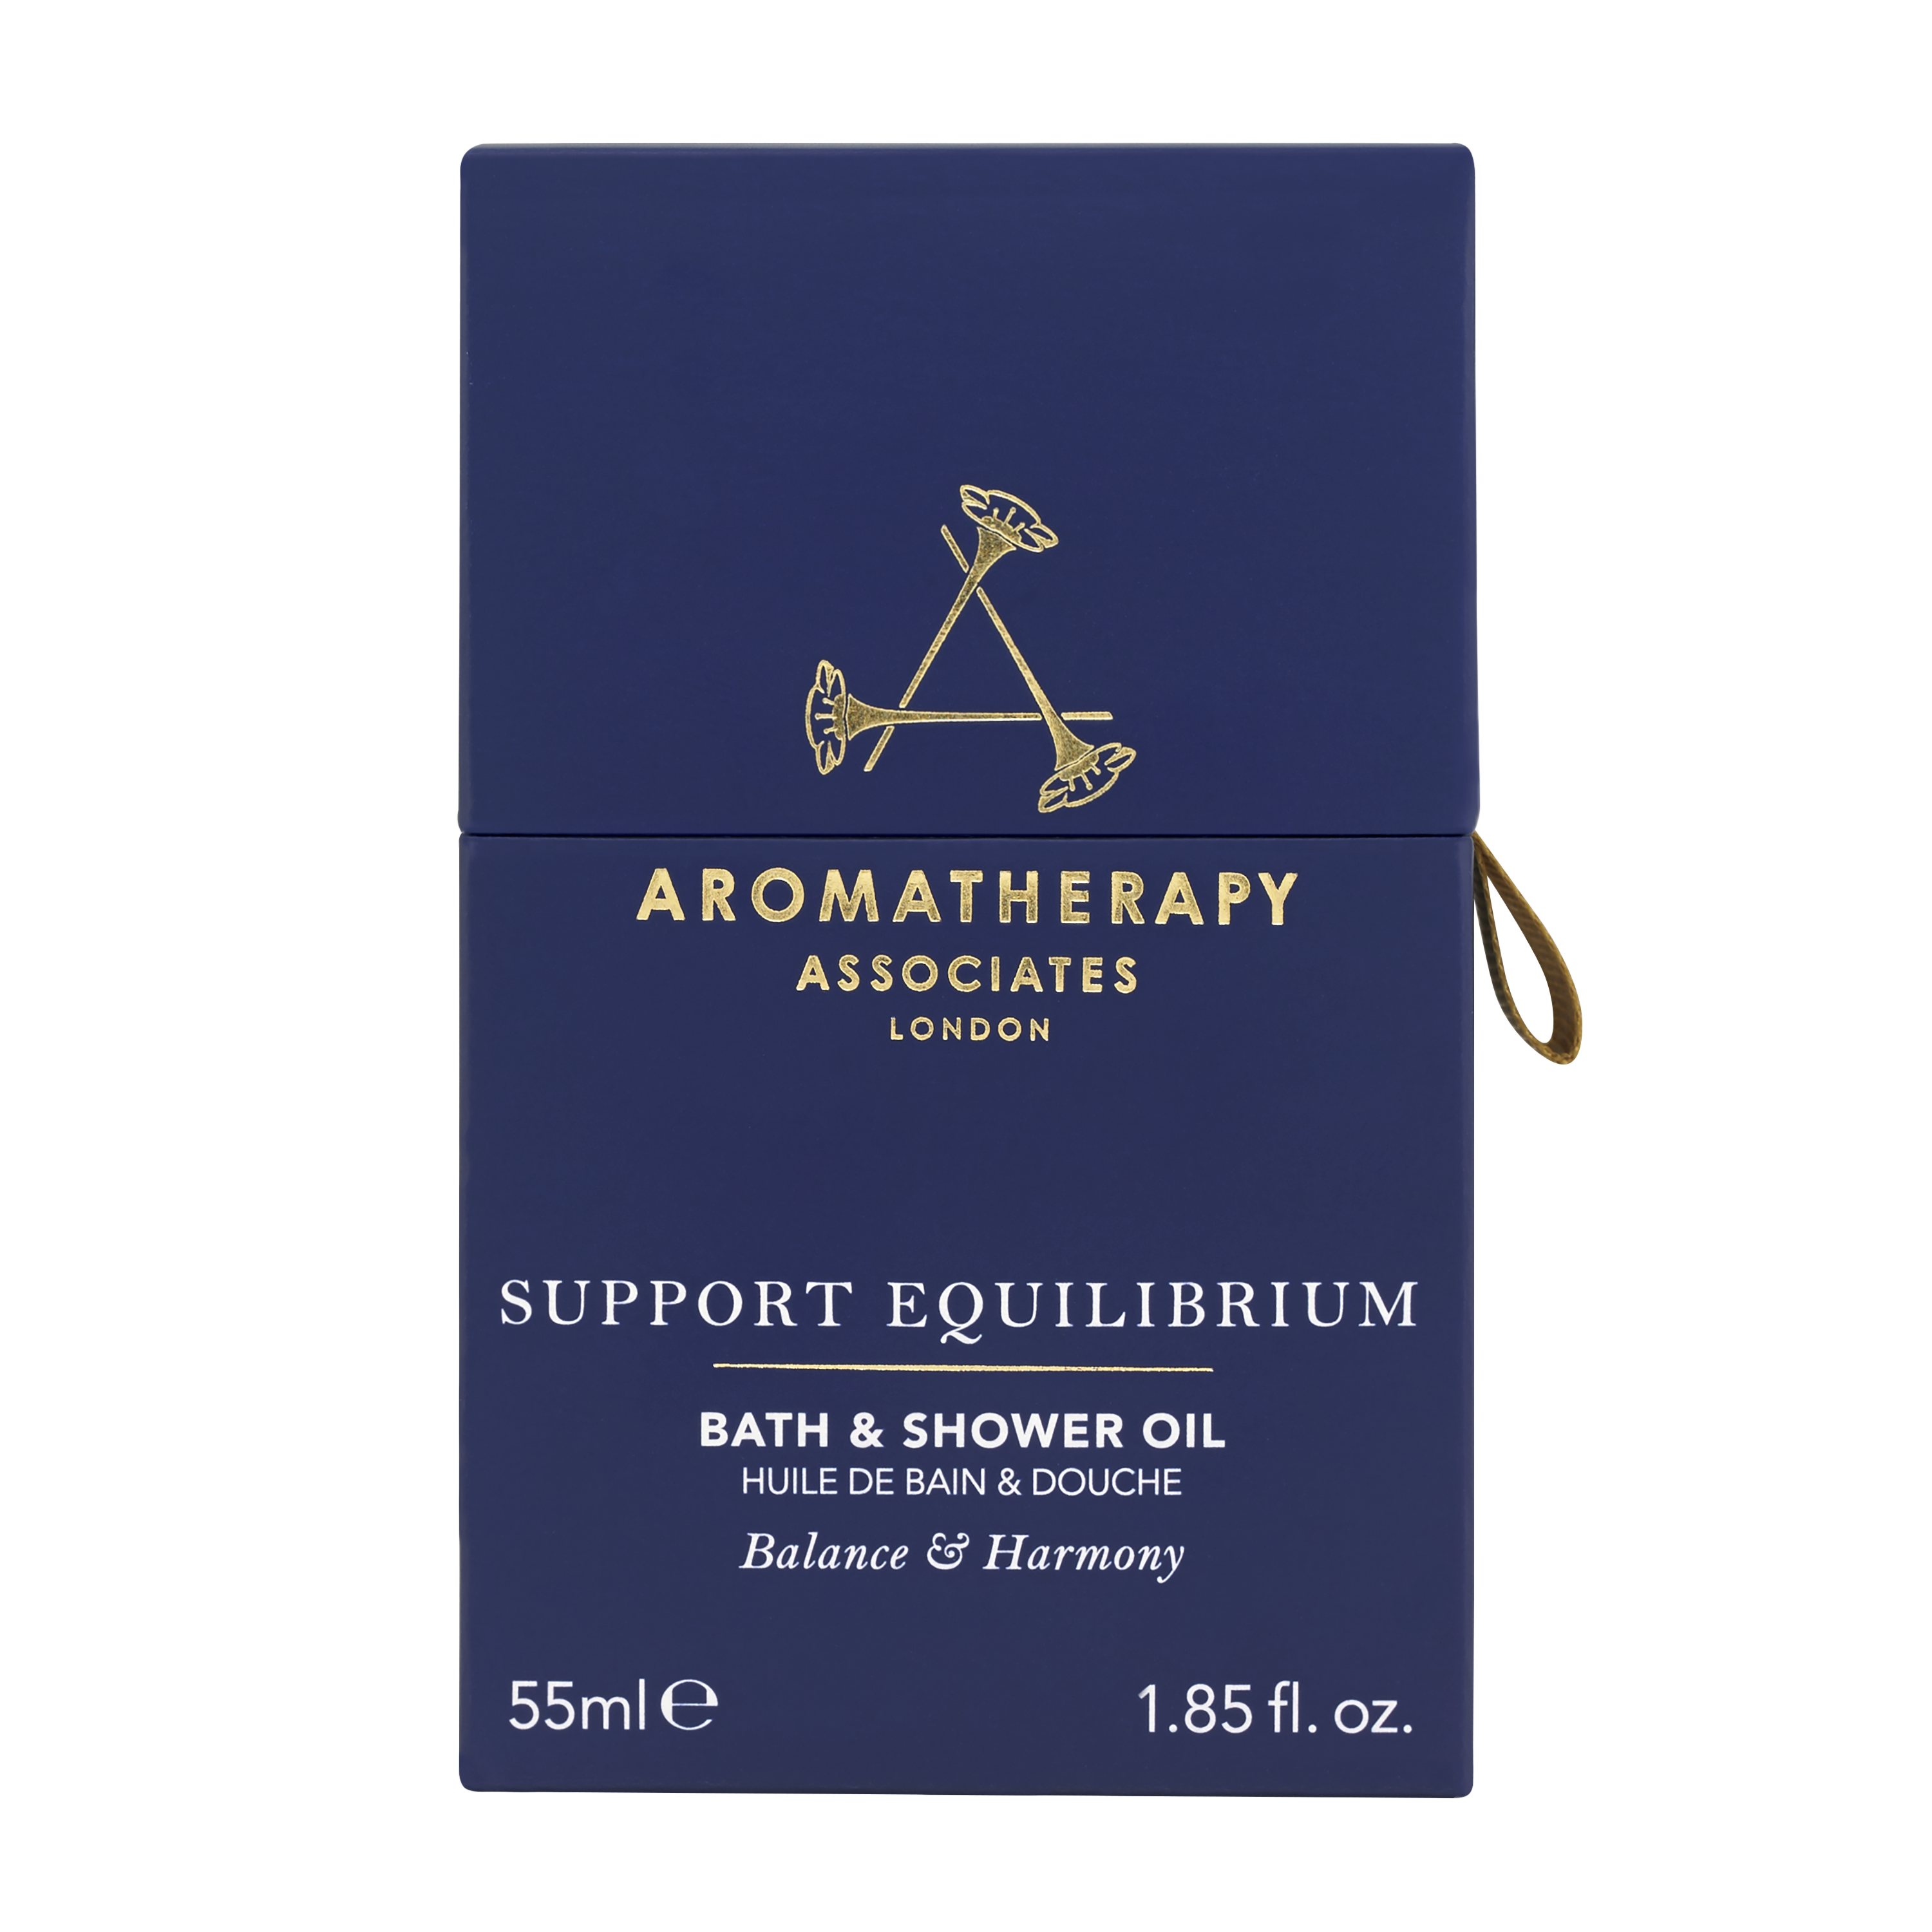 Support Equilibrium Bath & Shower Oil 55ml Aromatherapy Associates